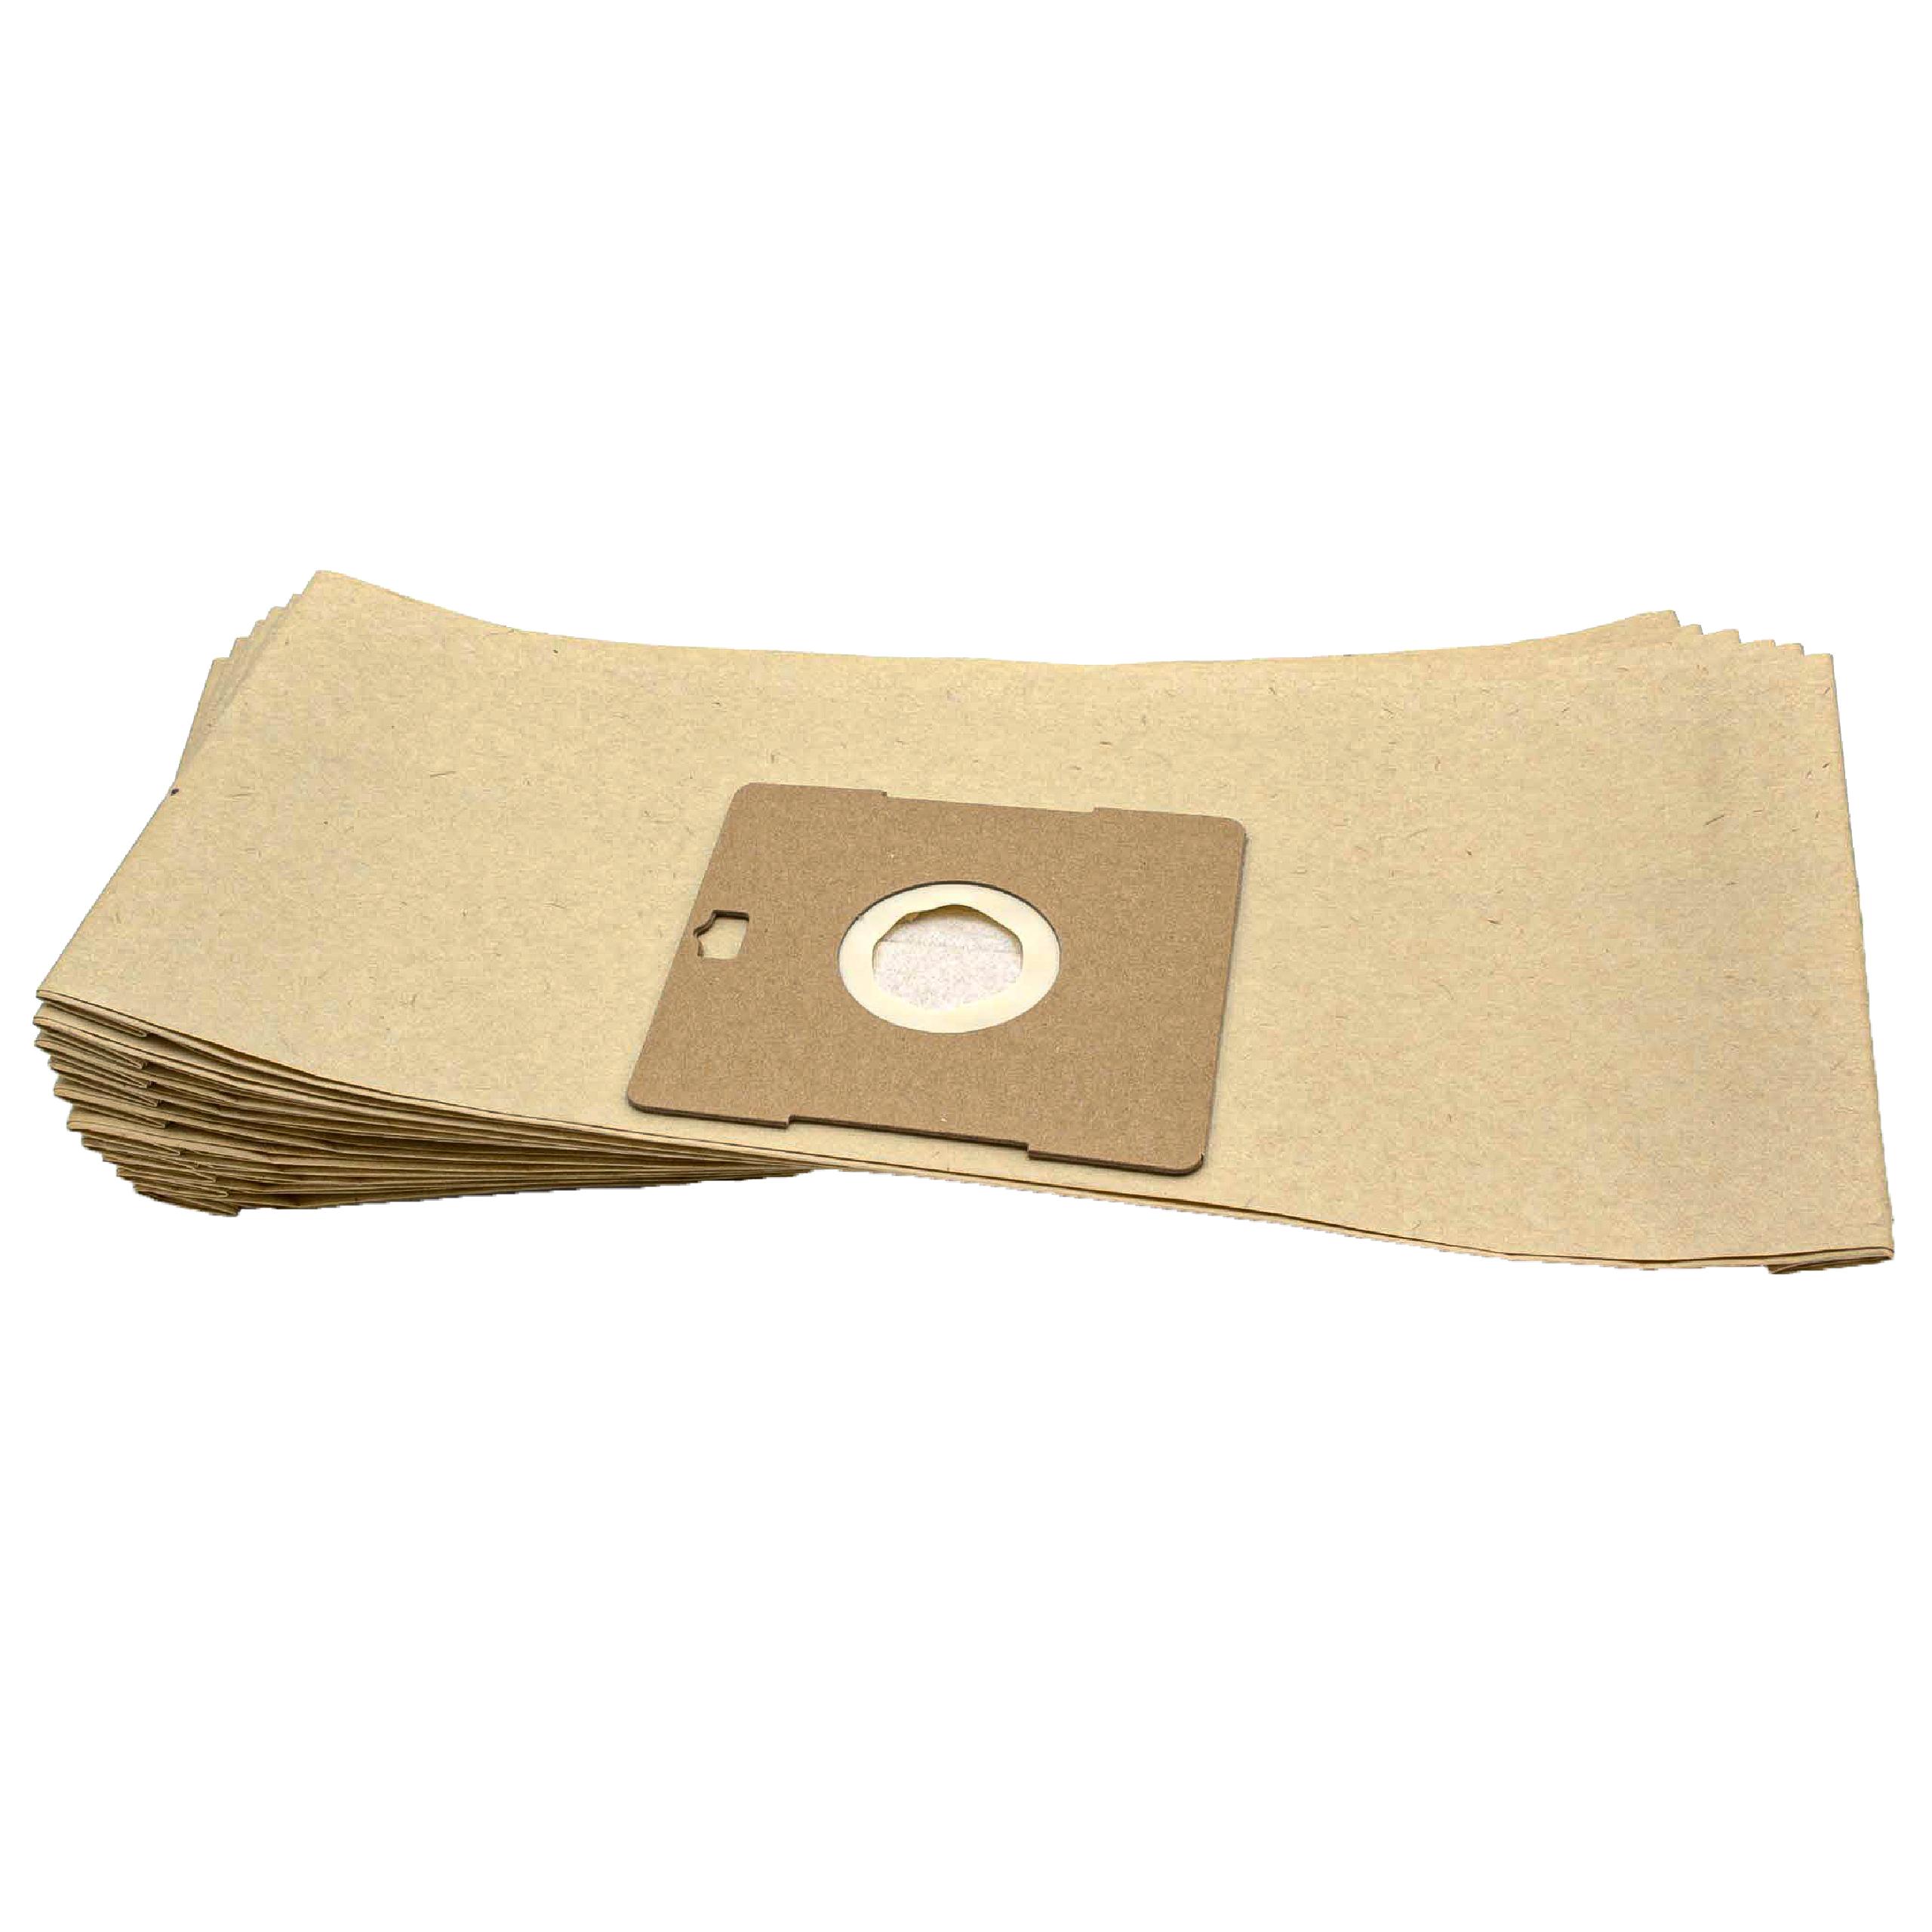 10x bolsa aspiradora reemplaza Grundig tipo G - bolsa higiénica para Proline - papel